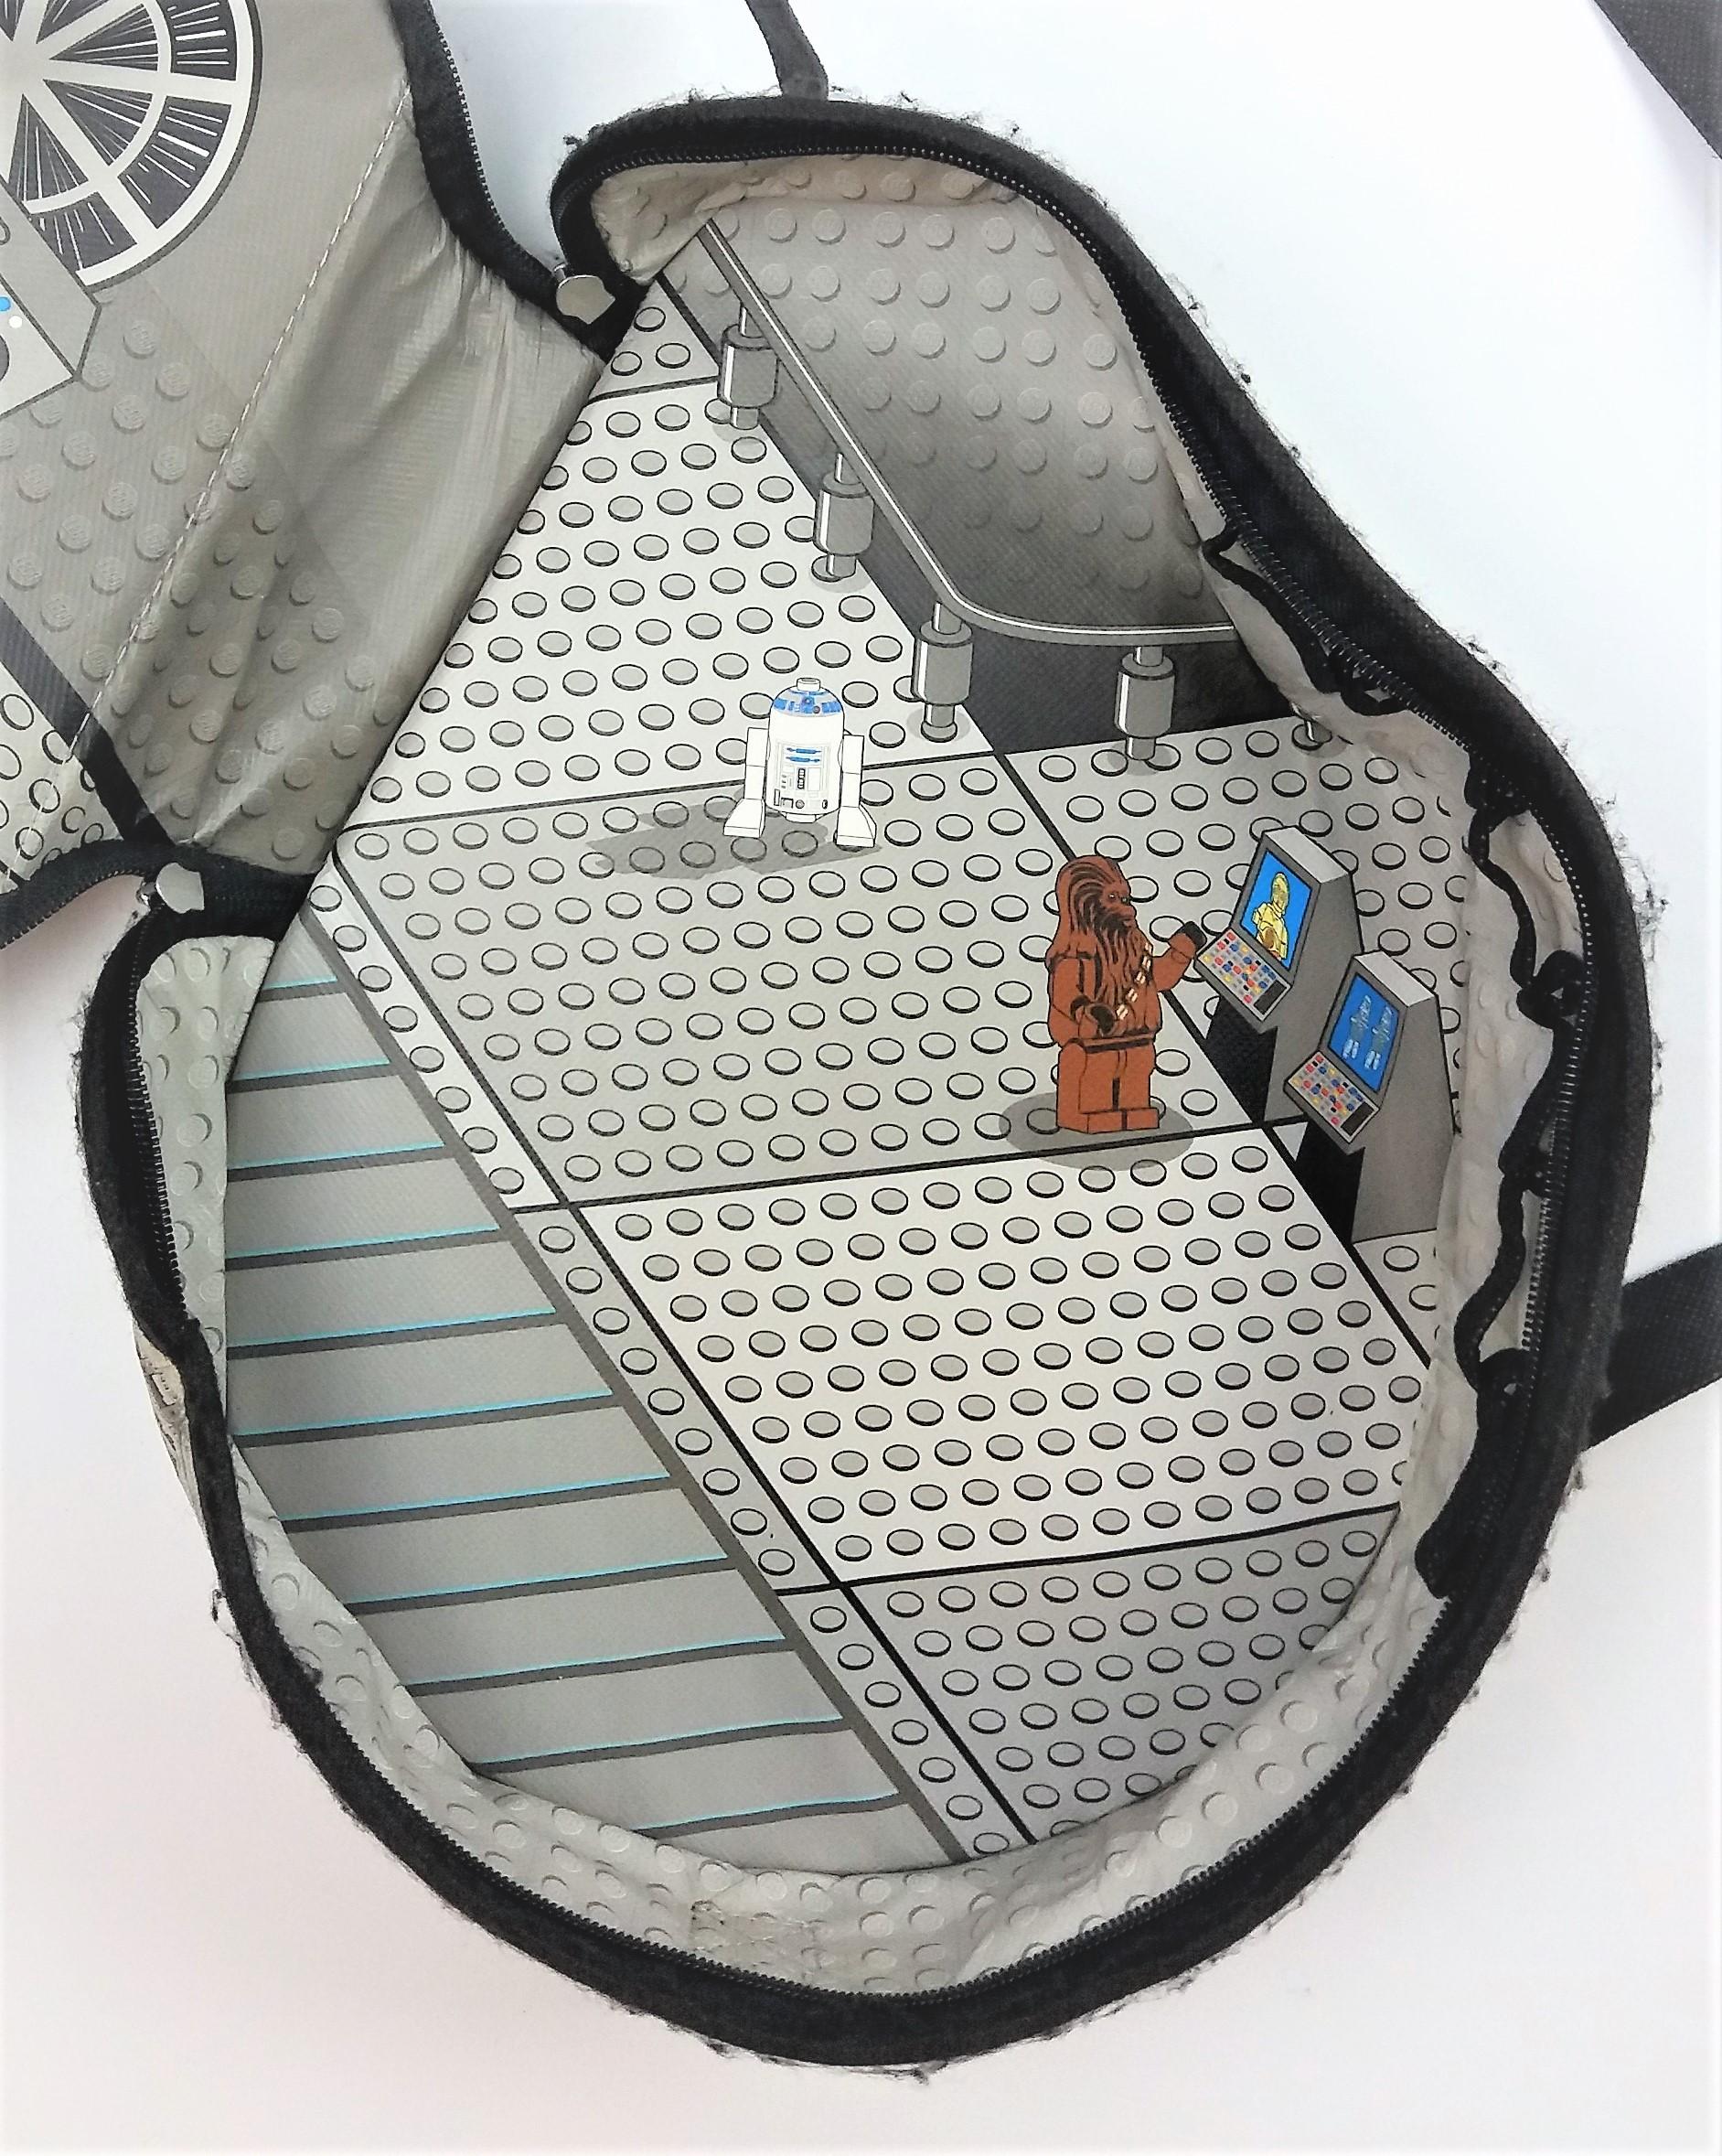 Lego Star Wars Millenium Falcon Zippered Mini Figure Storage Carry Case